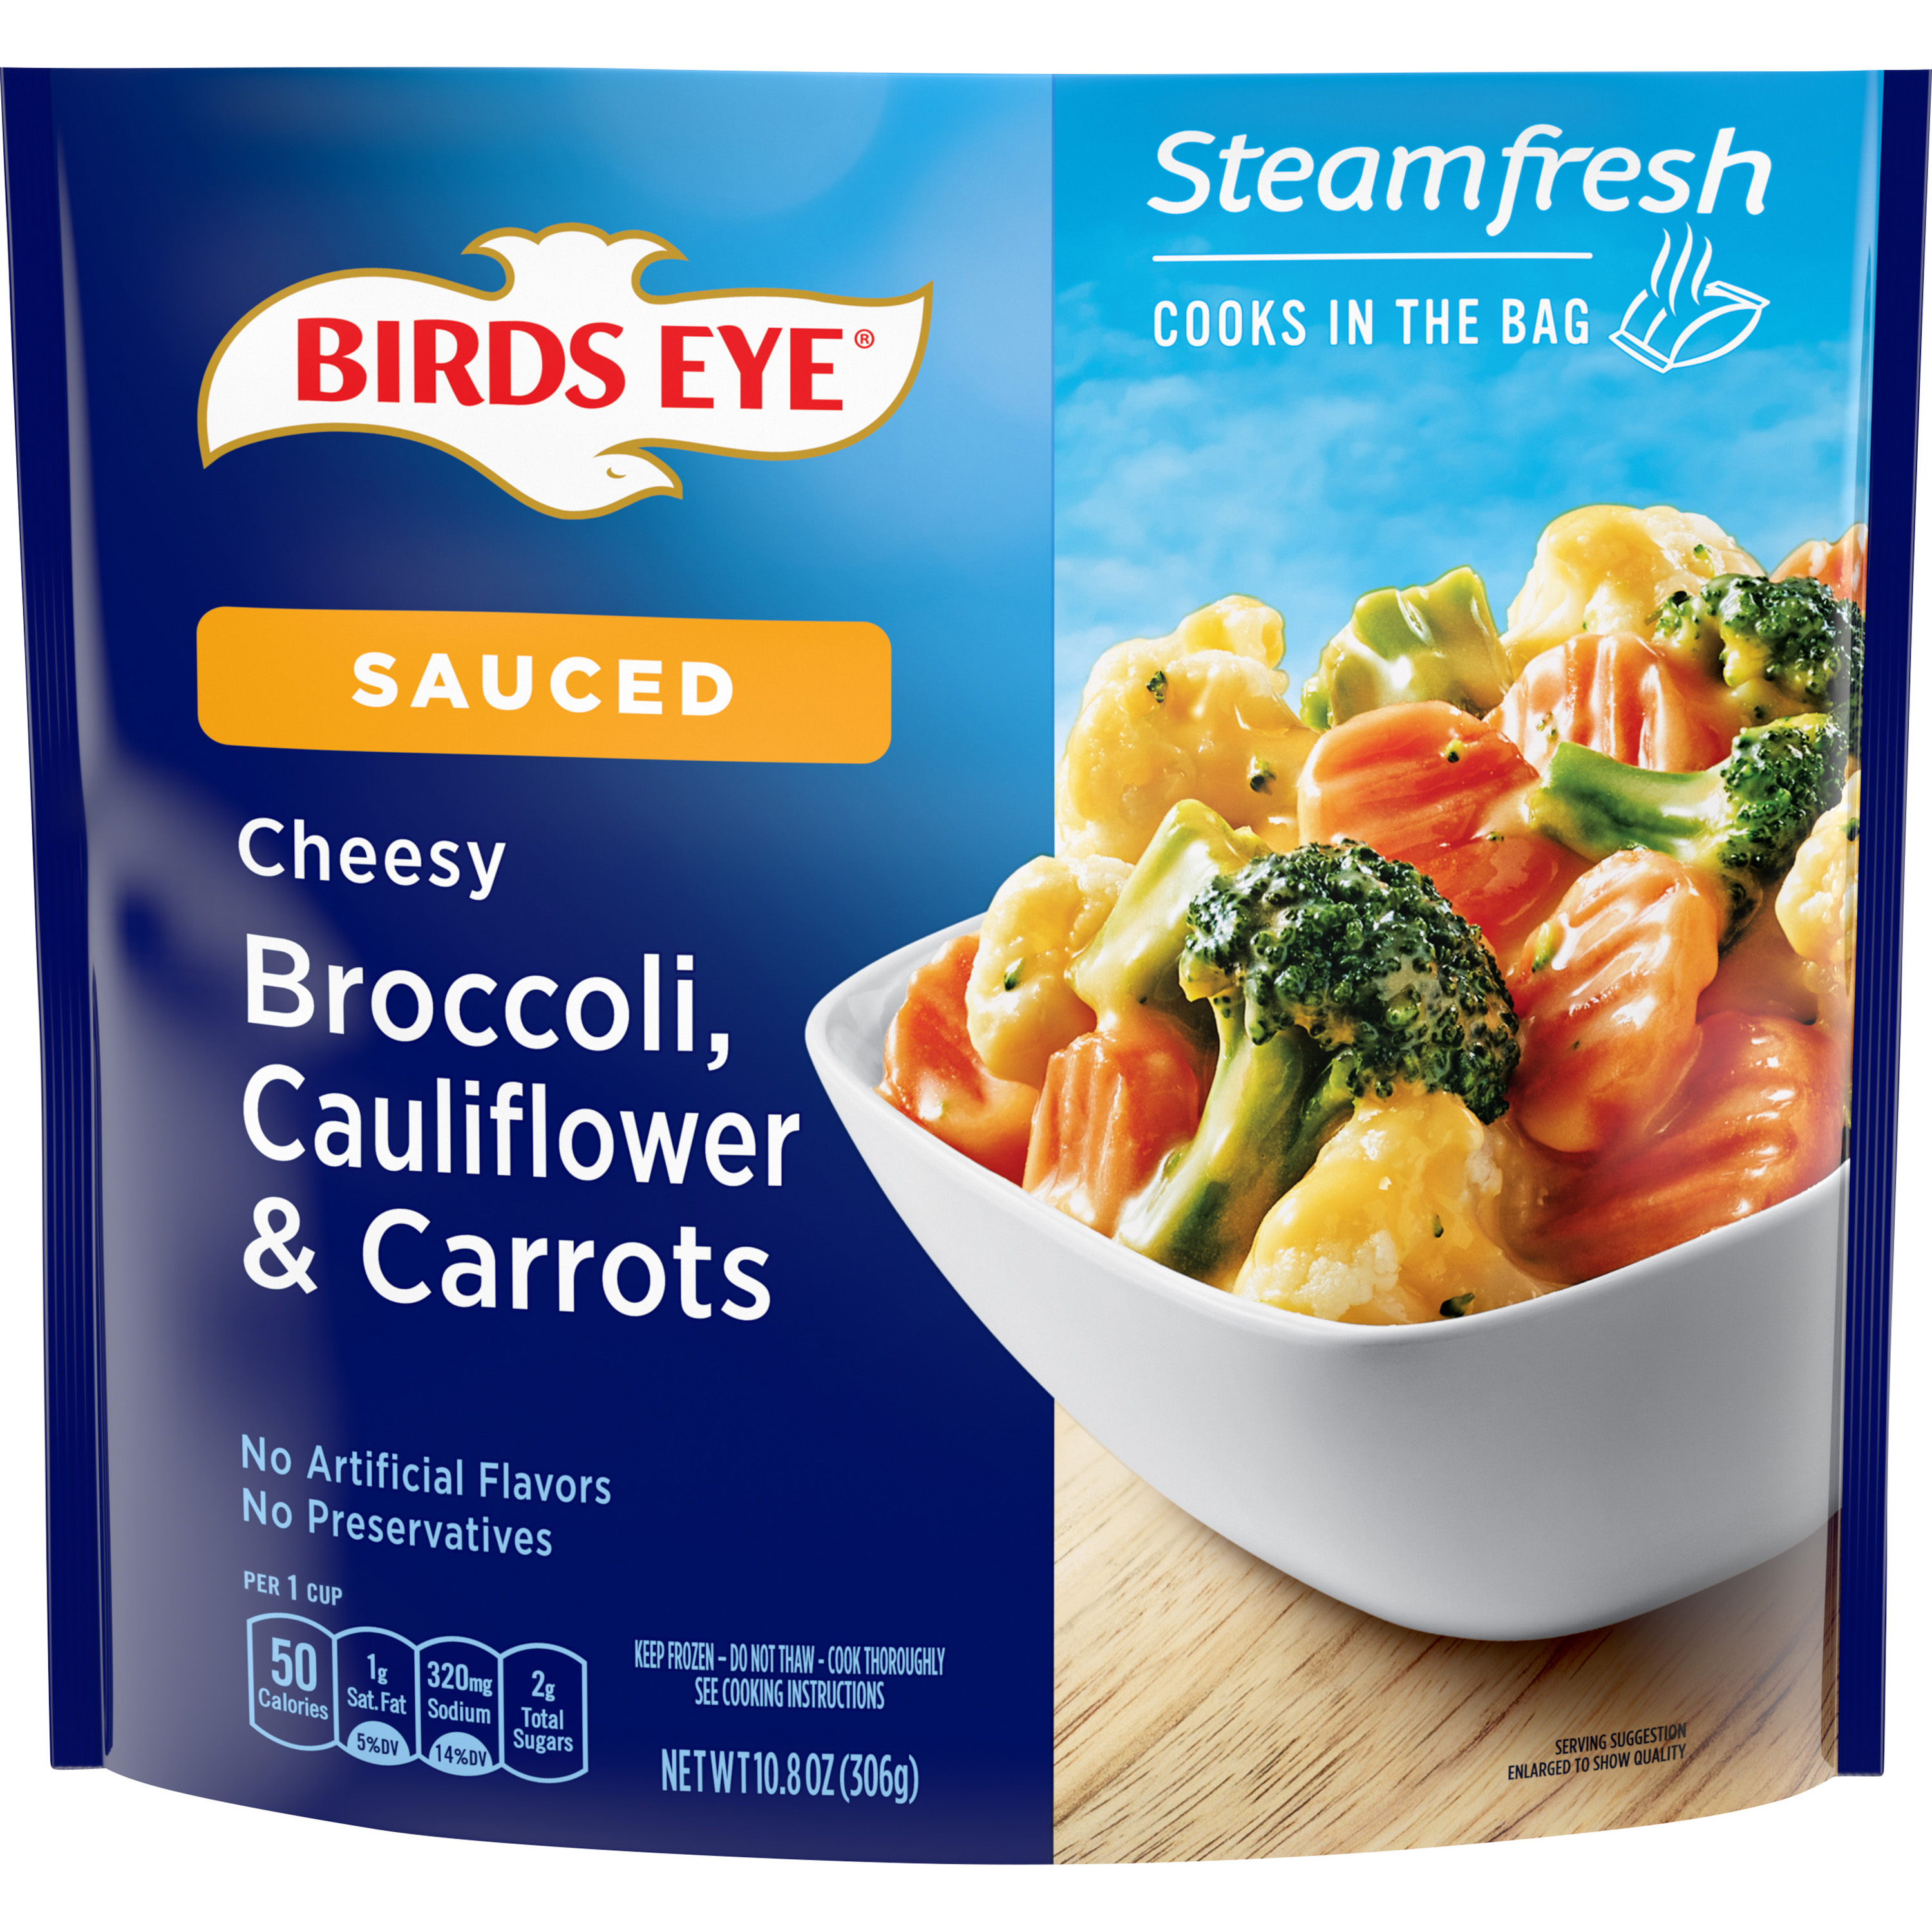 Birds Eye Steamfresh Chef’s Favorites Sauced Broccoli, Cauliflower & Carrots with Cheese Sauce